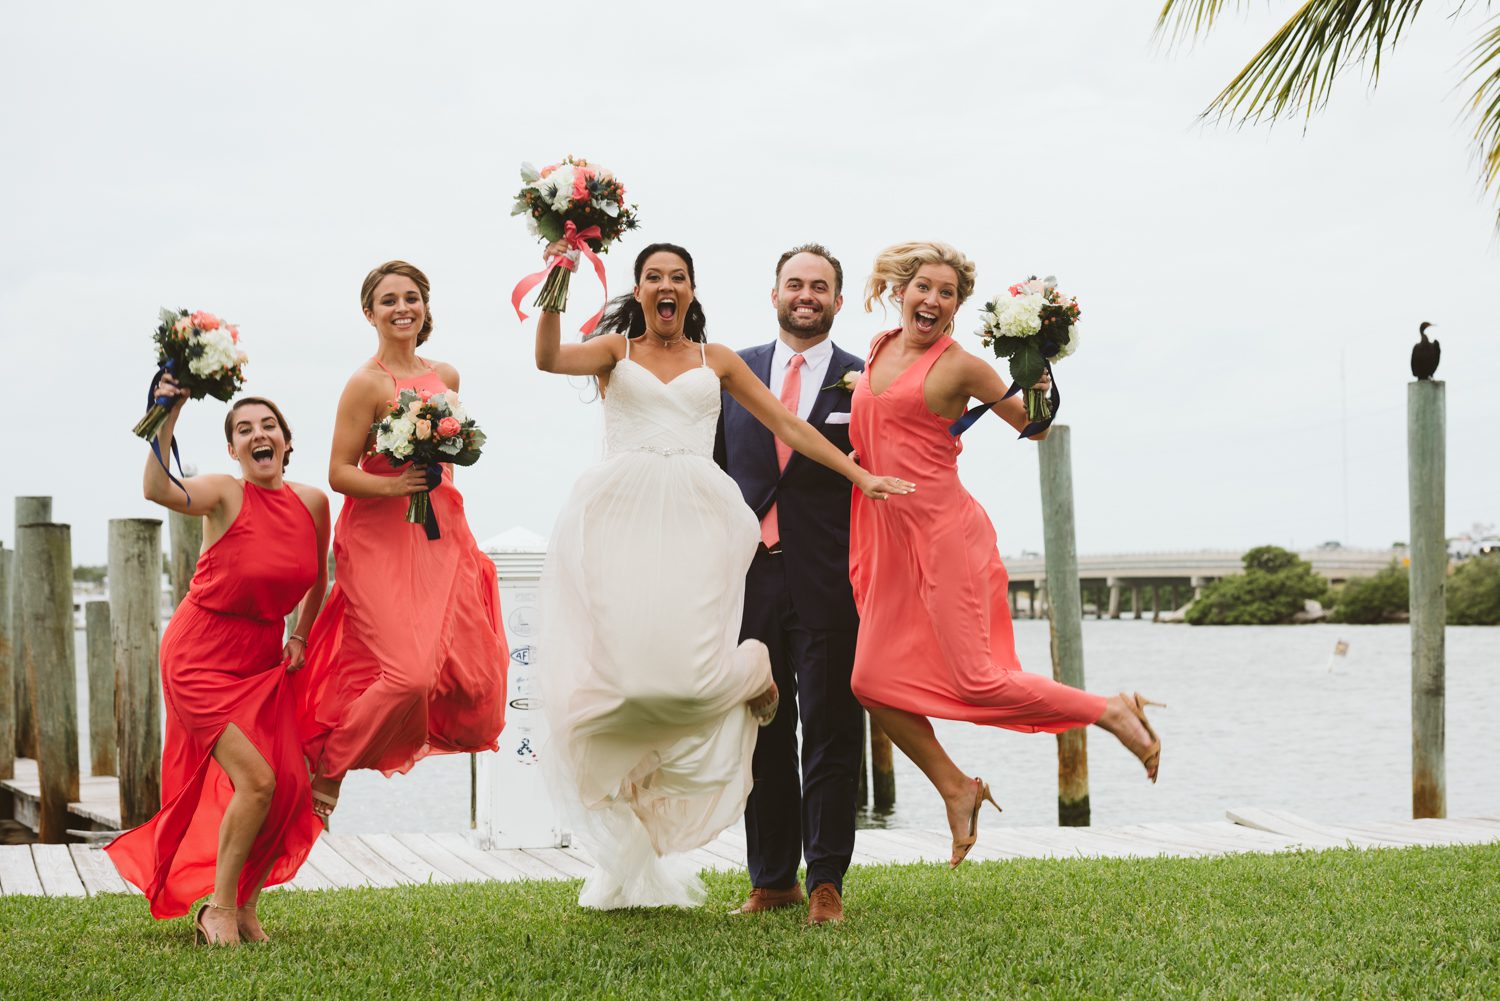 A group of bridesmaids jumping in the air at a Florida Keys wedding.